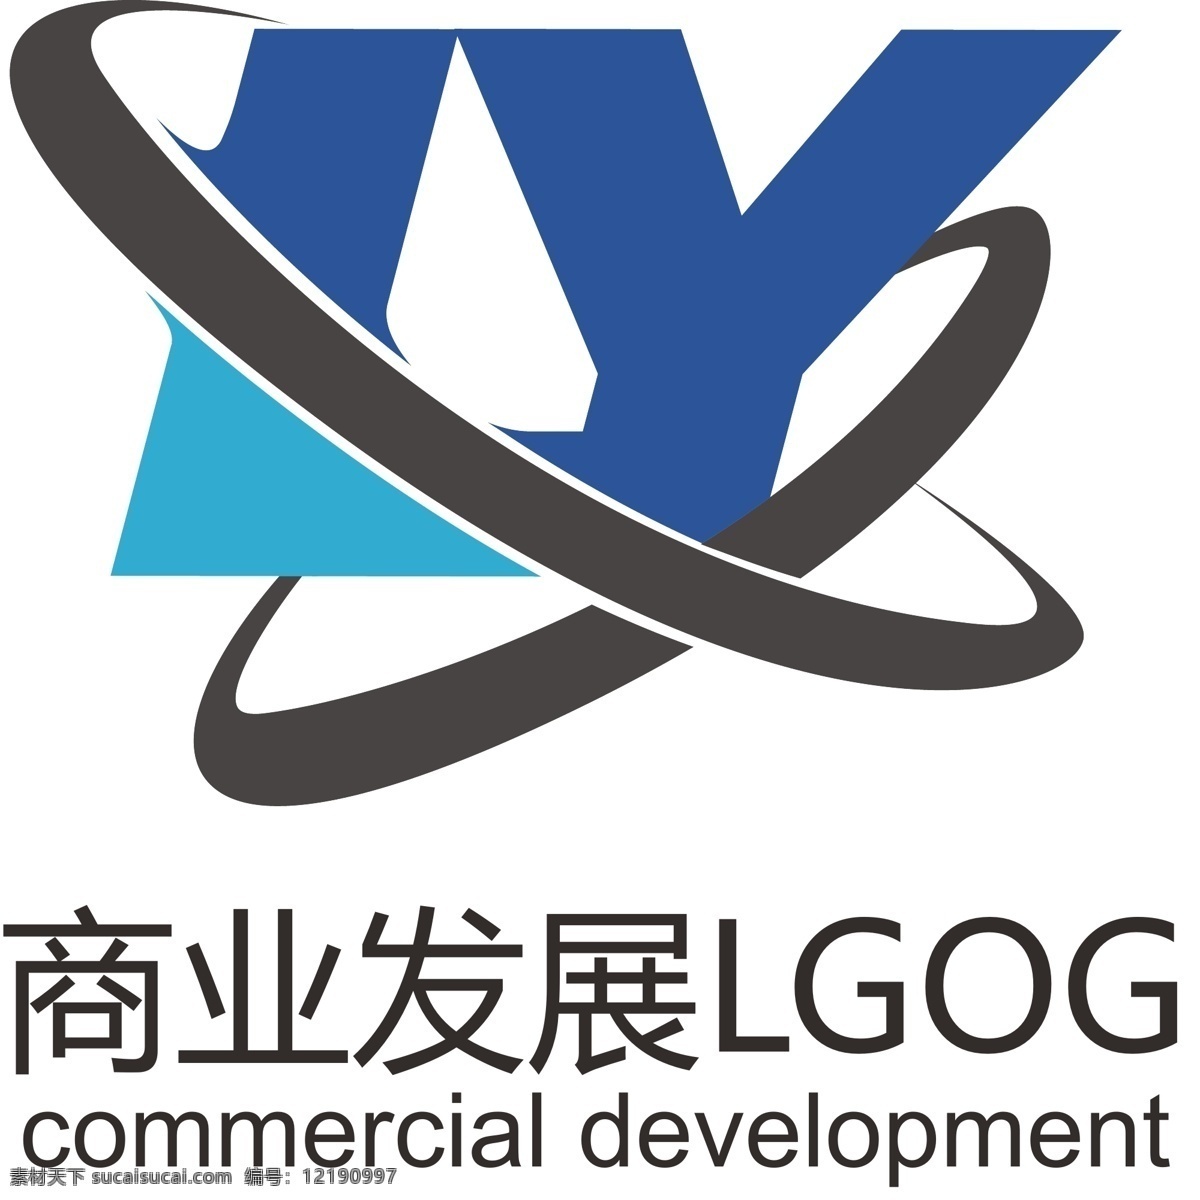 ly 商业 发展 科技网 络 生物技术 公司 logo 字母ly 商业logo 科技 网络